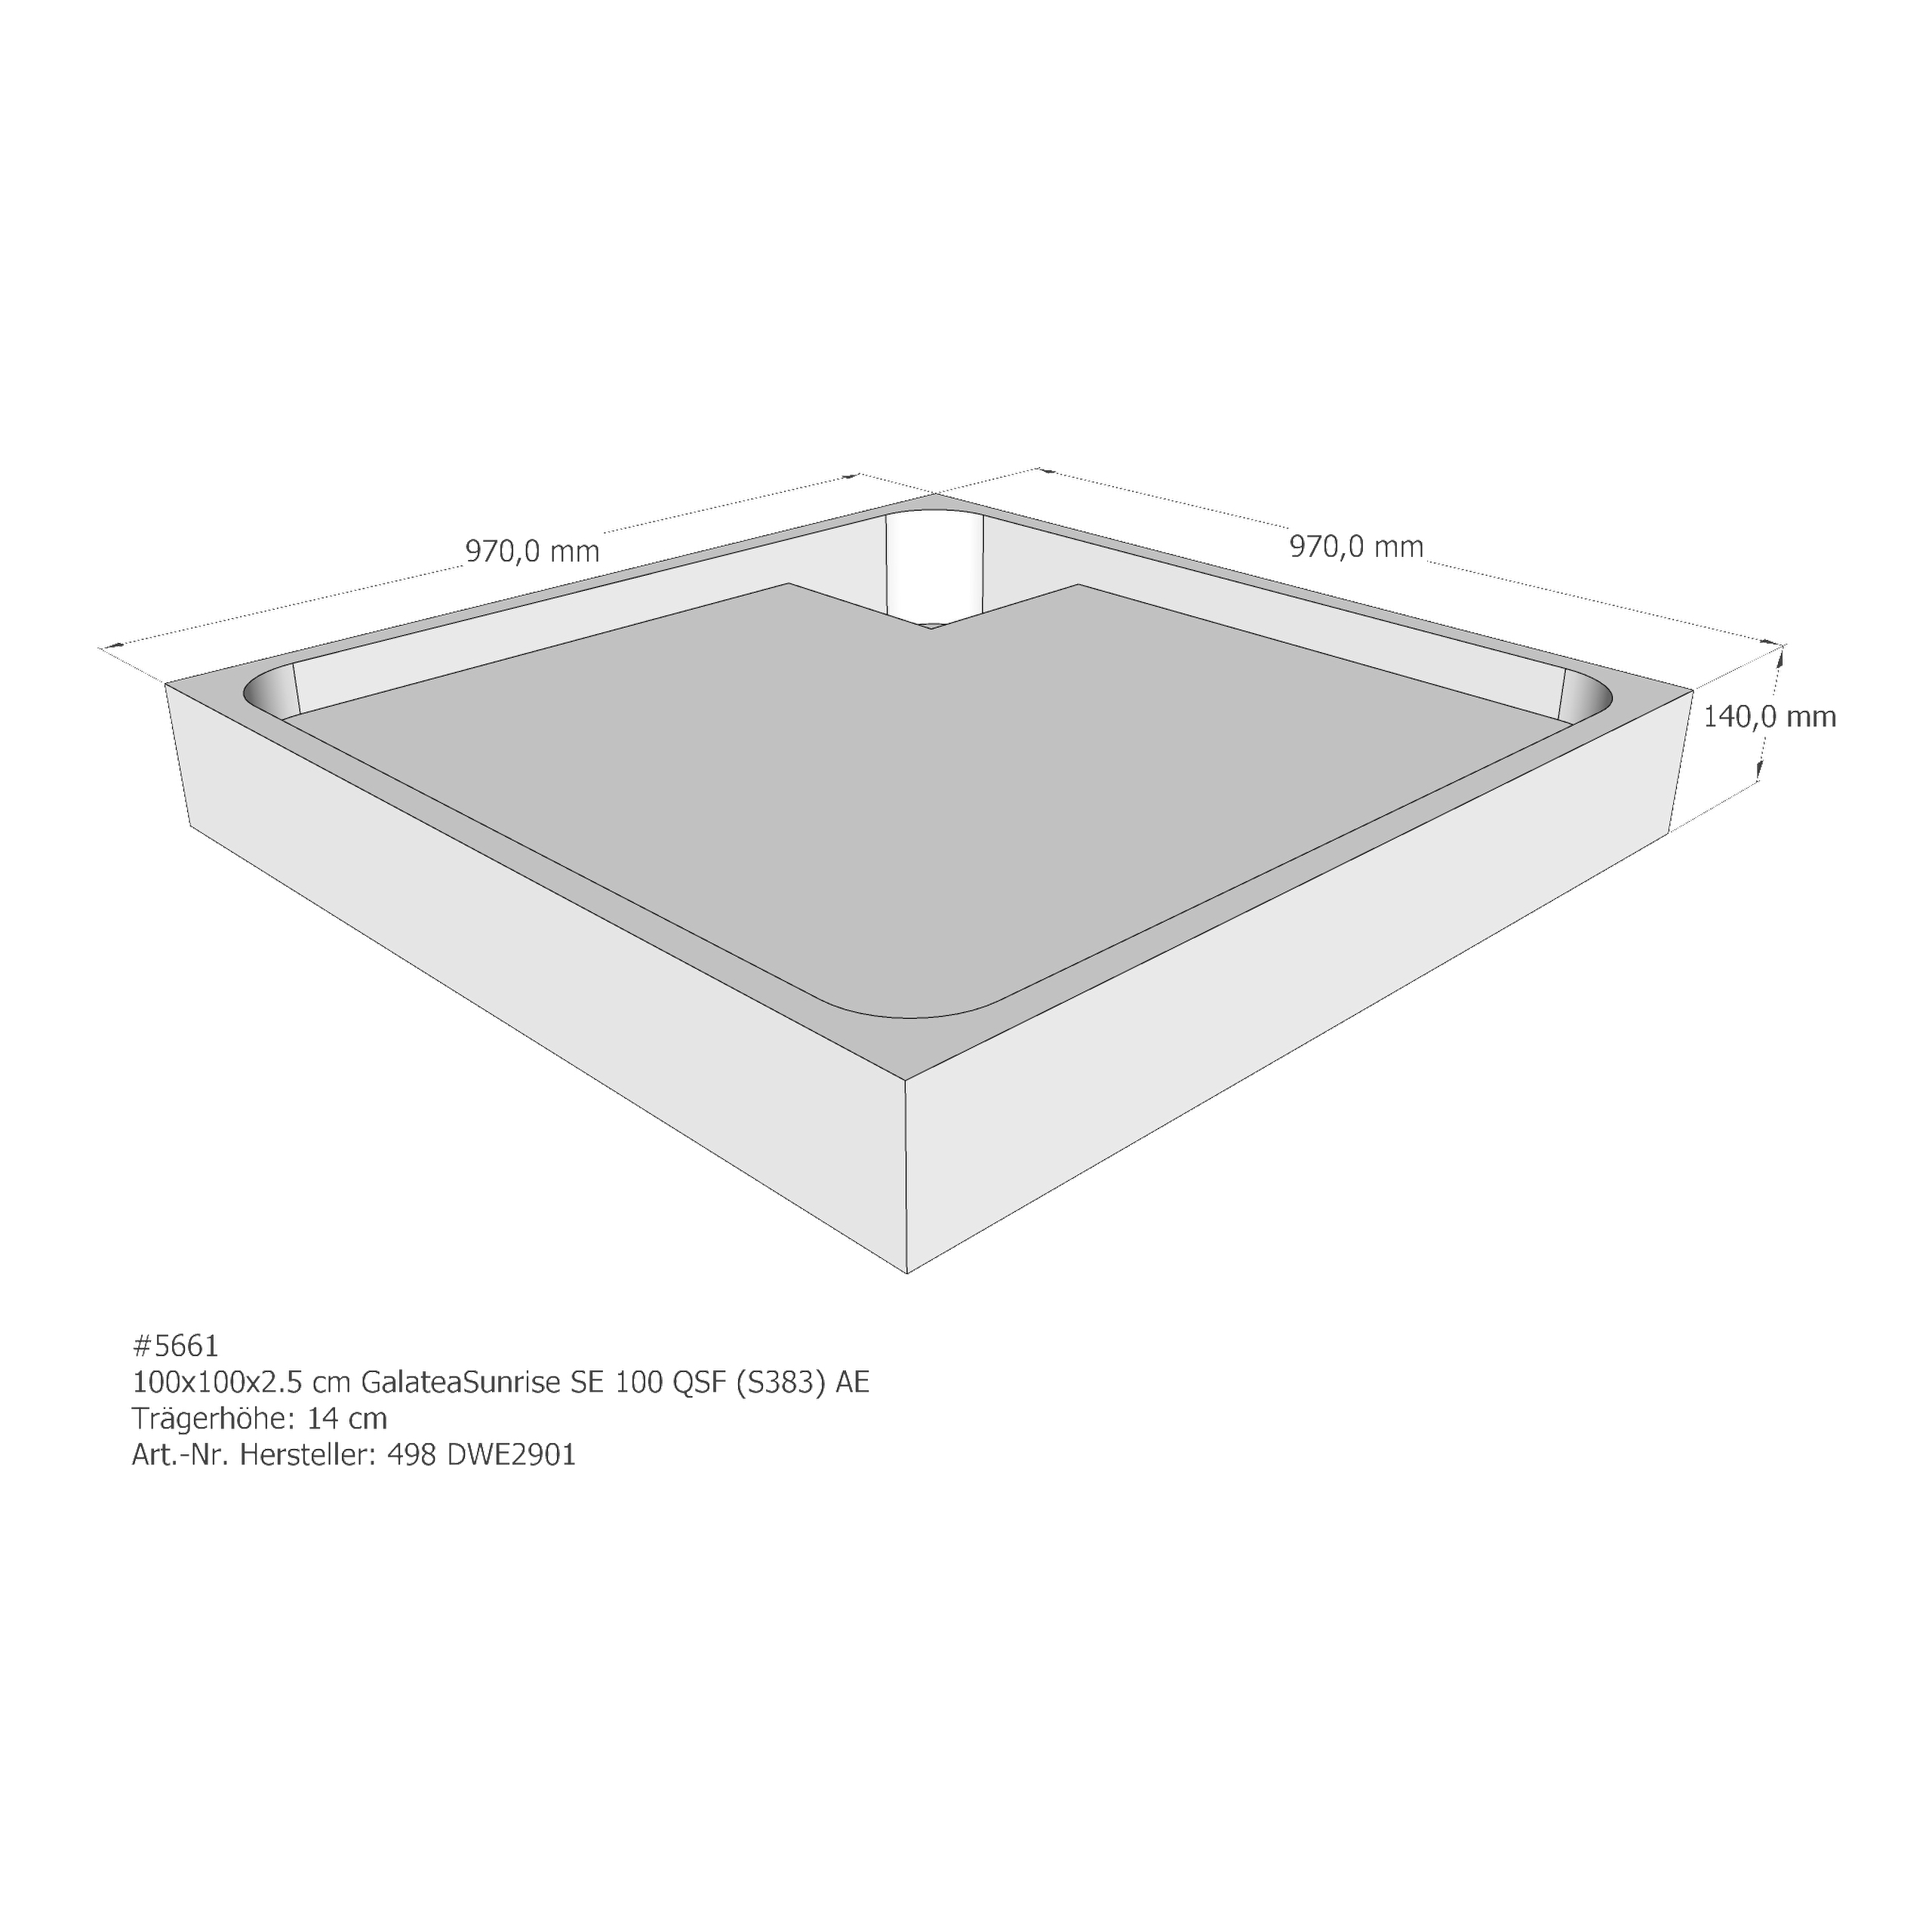 Duschwannenträger für Galatea~Sunrise SE 100 QSF 100 × 100 × 2,5 cm